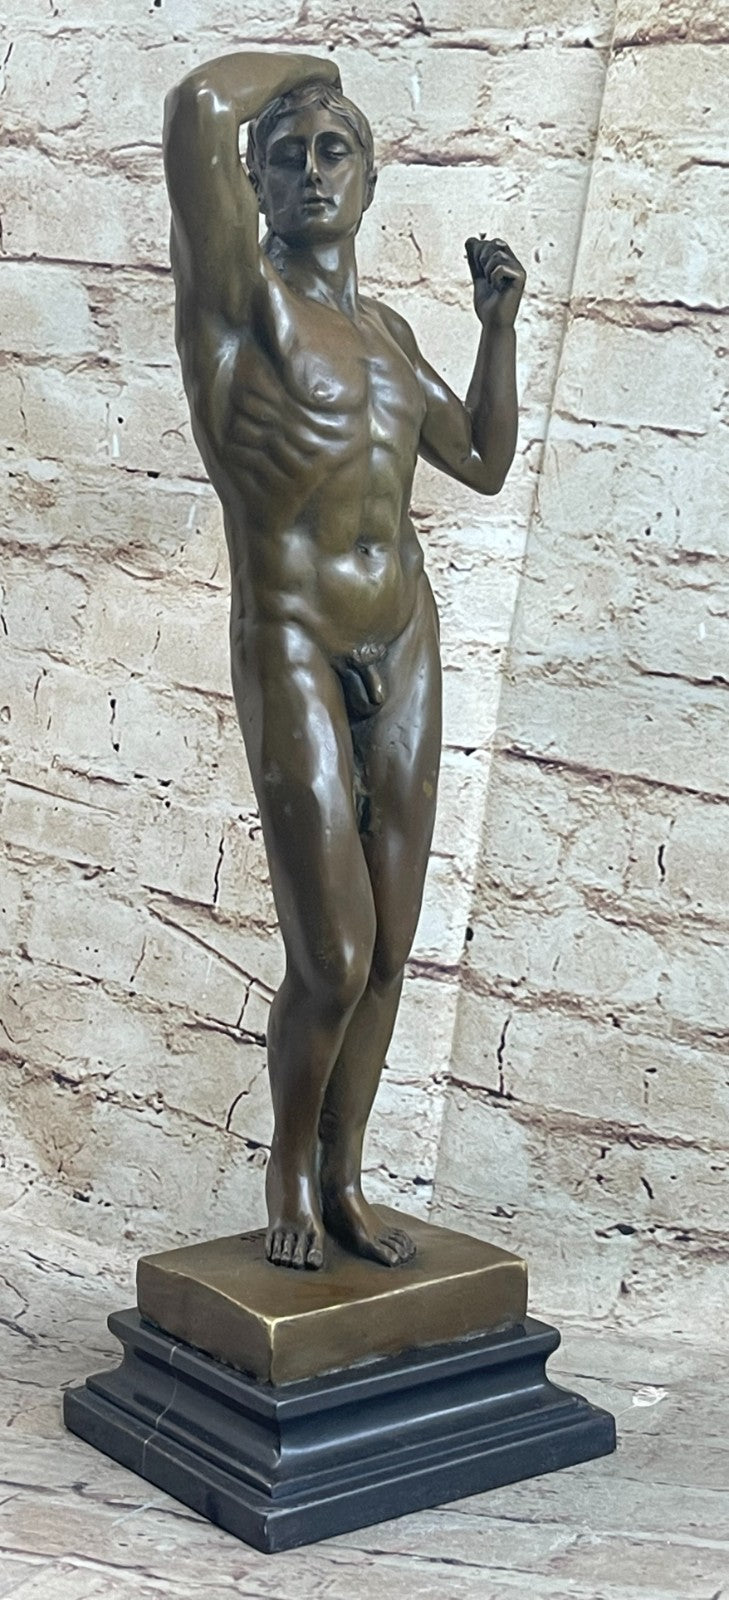 Art Deco Erotic Art Nude Male by Rodin Bronze Sculpture Marble Base Figurine